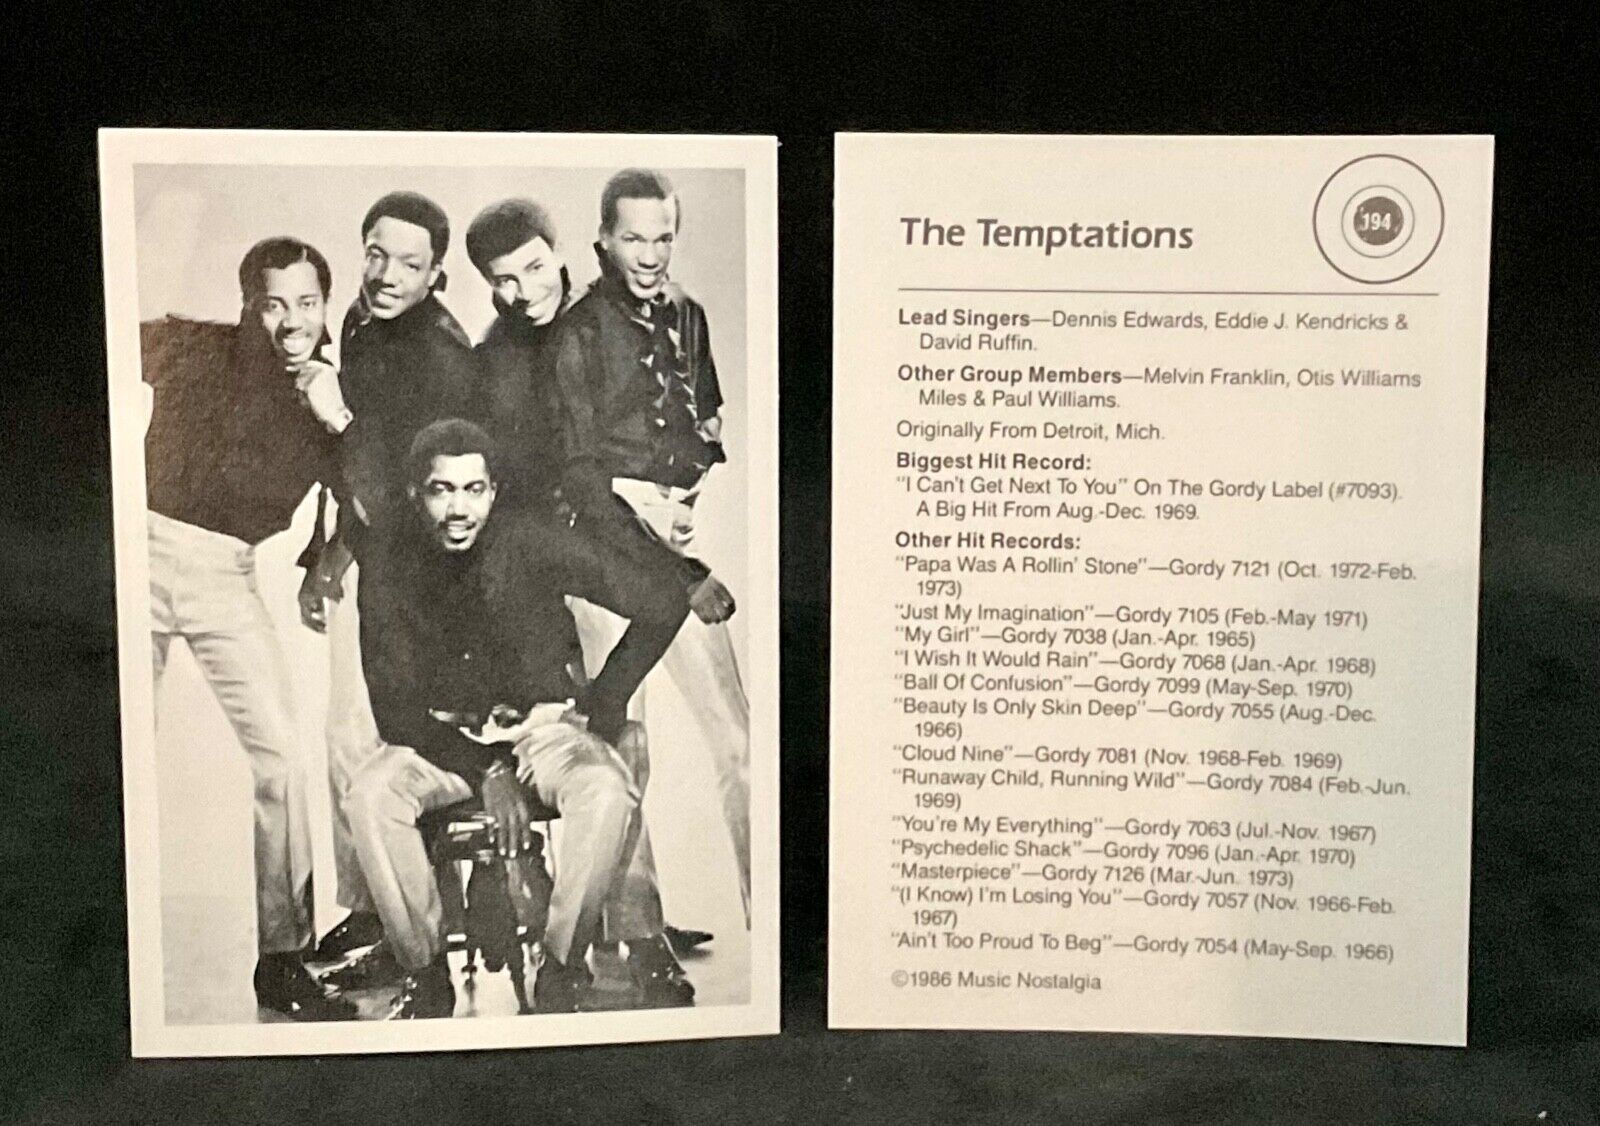 The Temptations 1986 Music Nostalgia Trading Card #194 NM-MT)